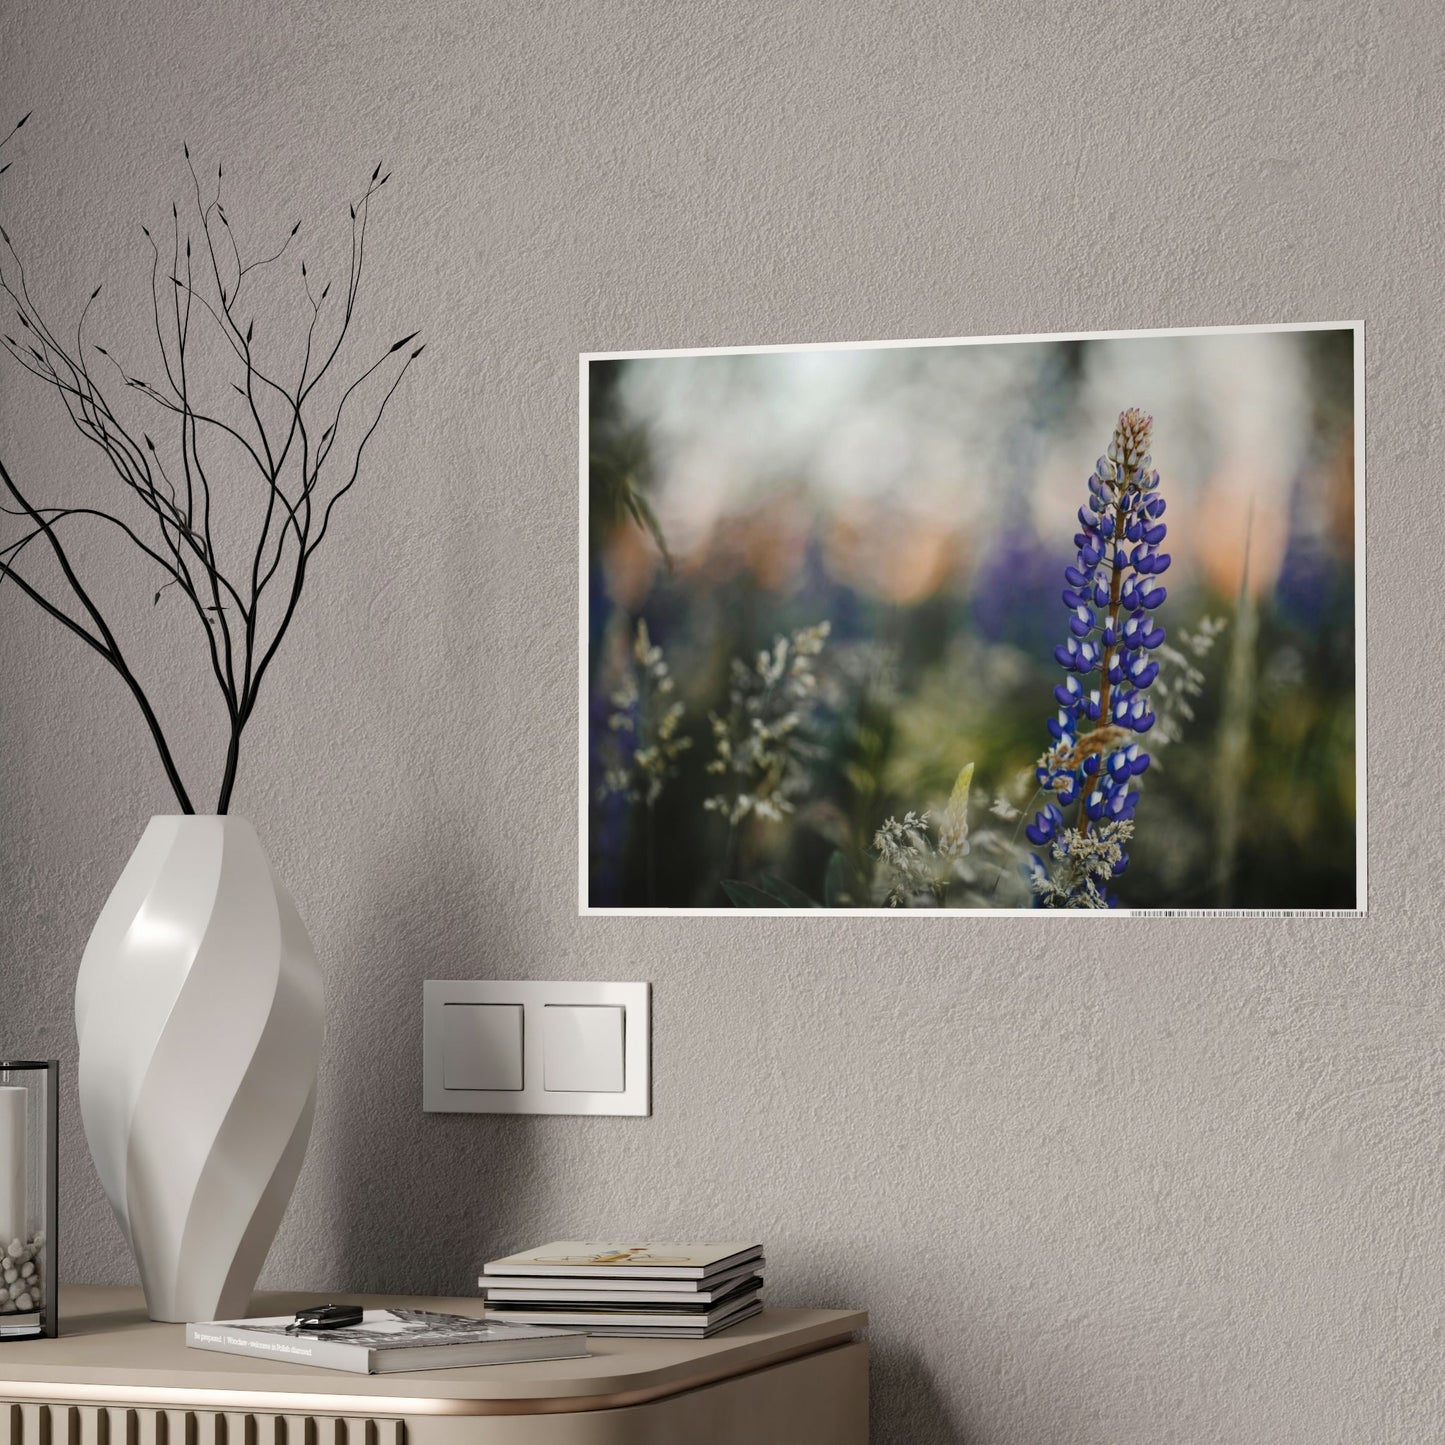 Bluebonnet Bliss: Artistic Canvas Print of a Serene Field of Flowers